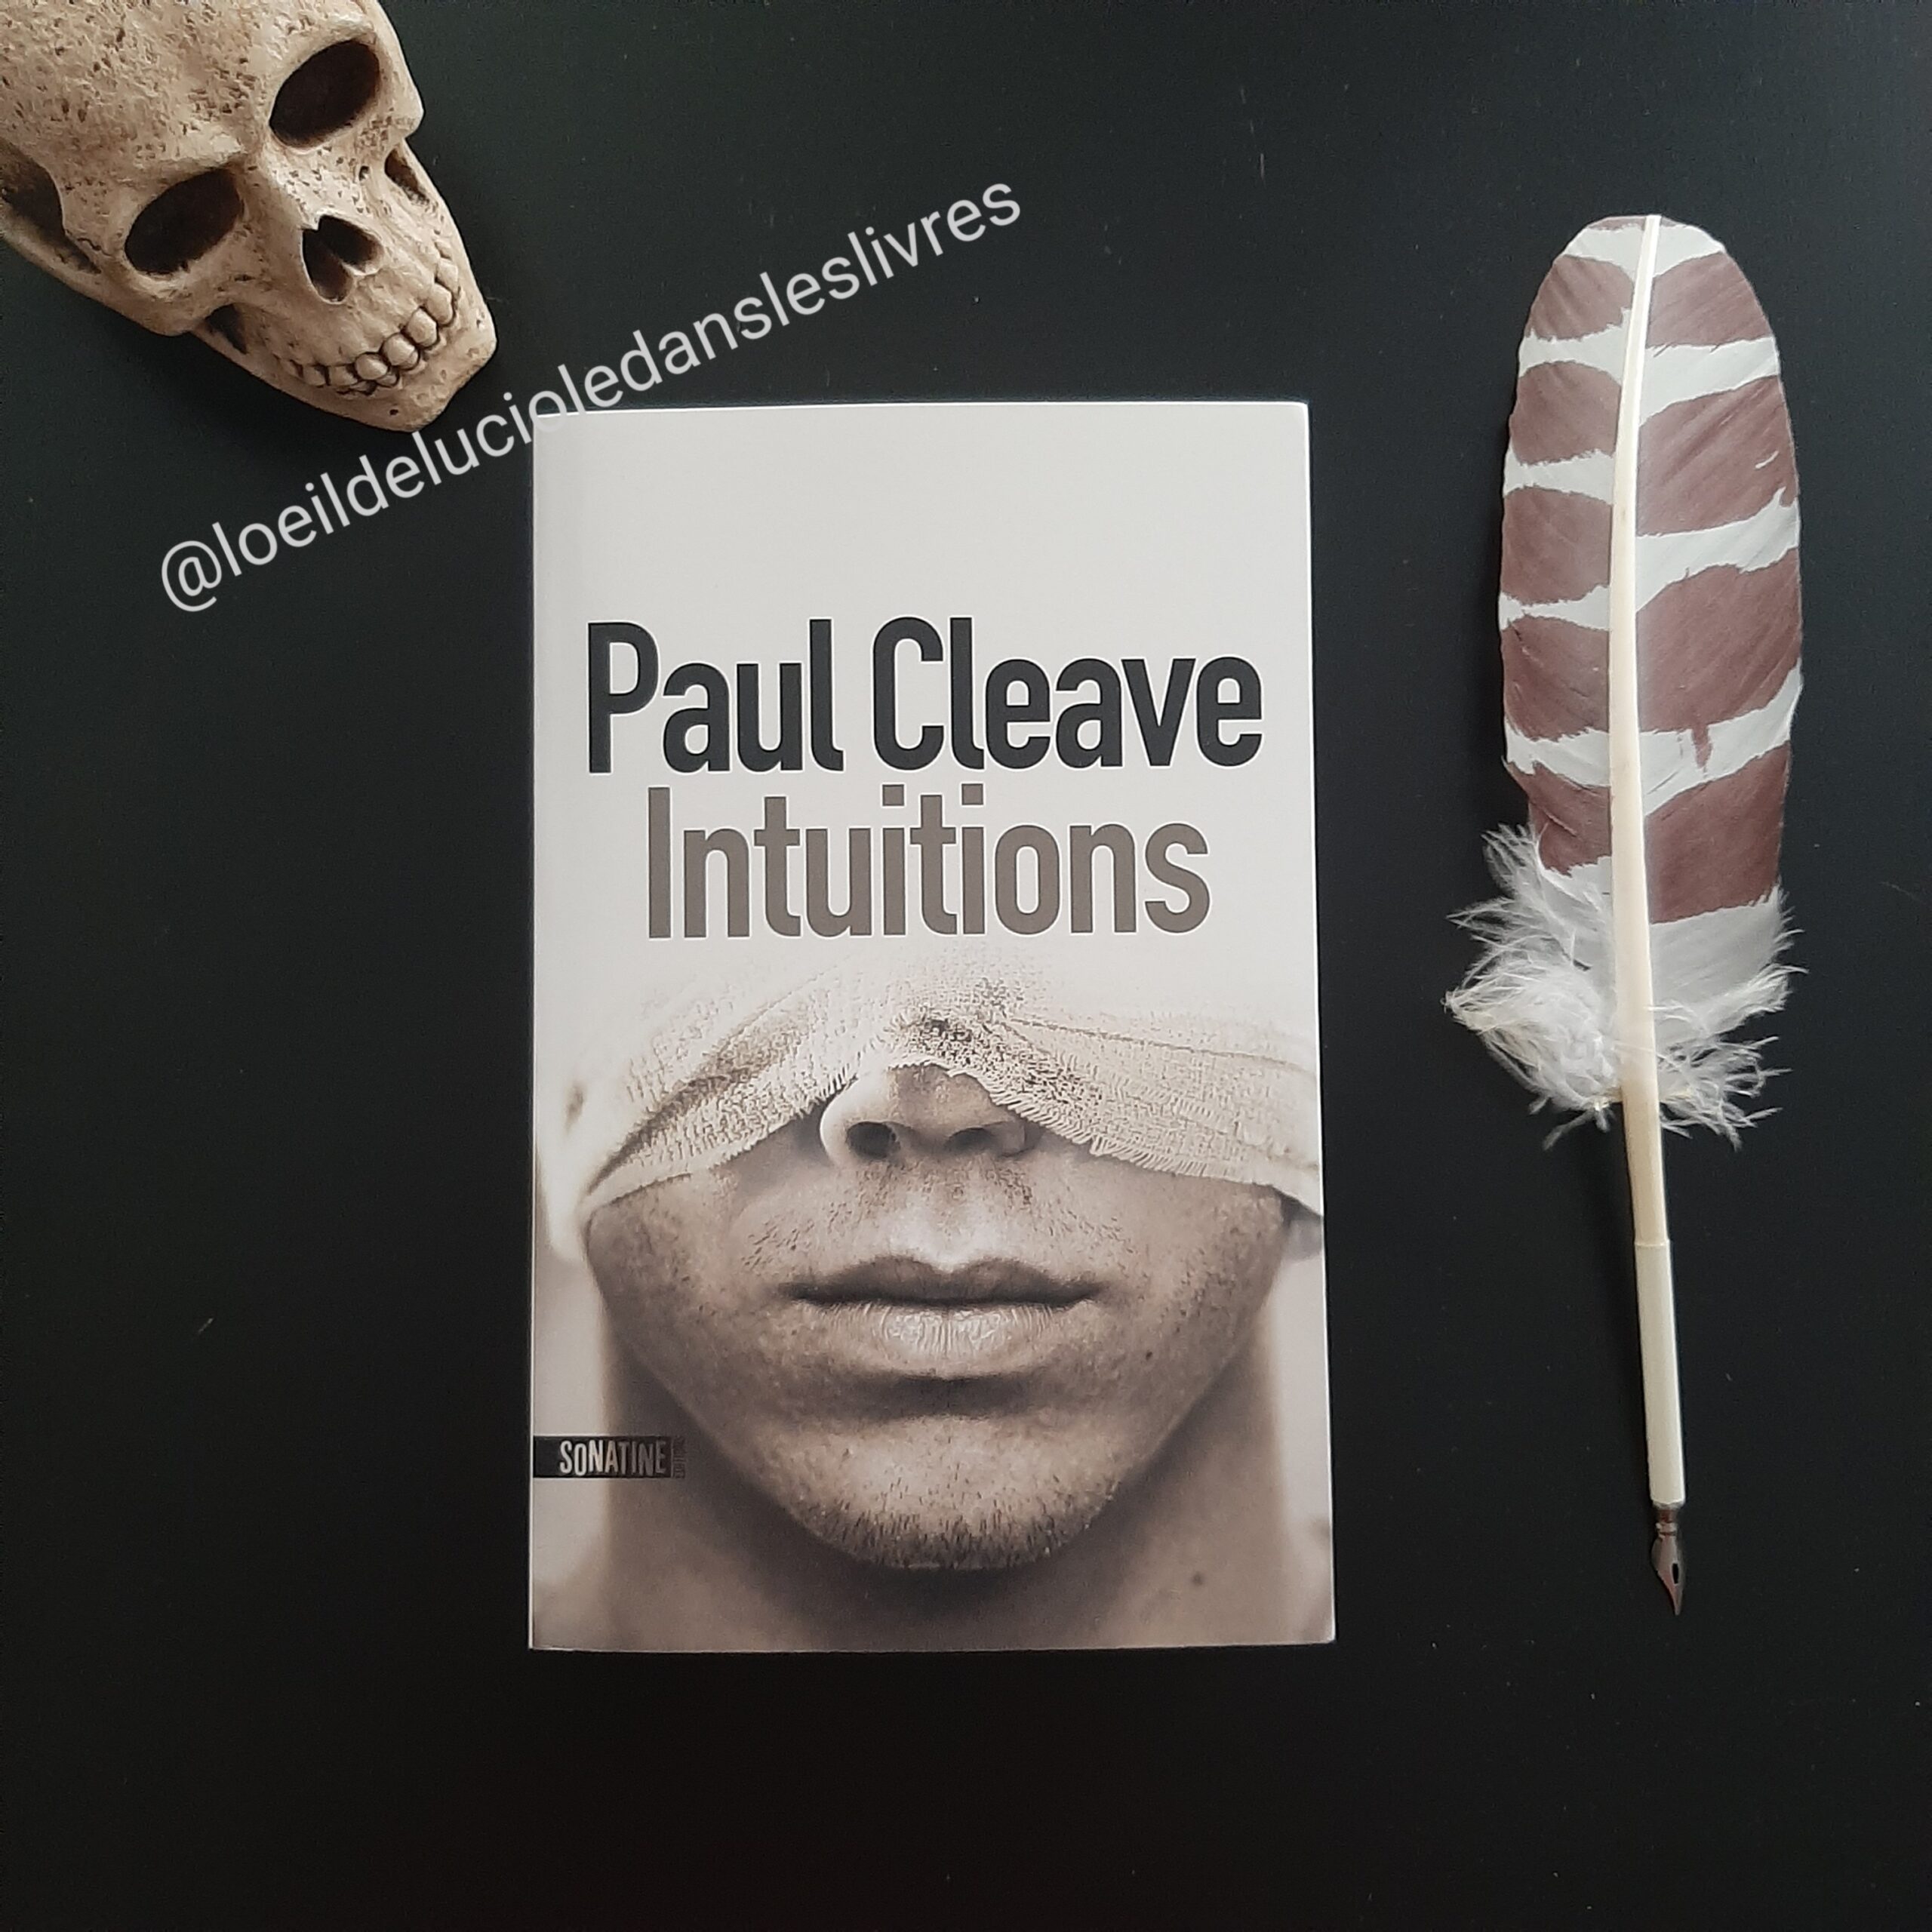 Intuitions de Paul Cleave